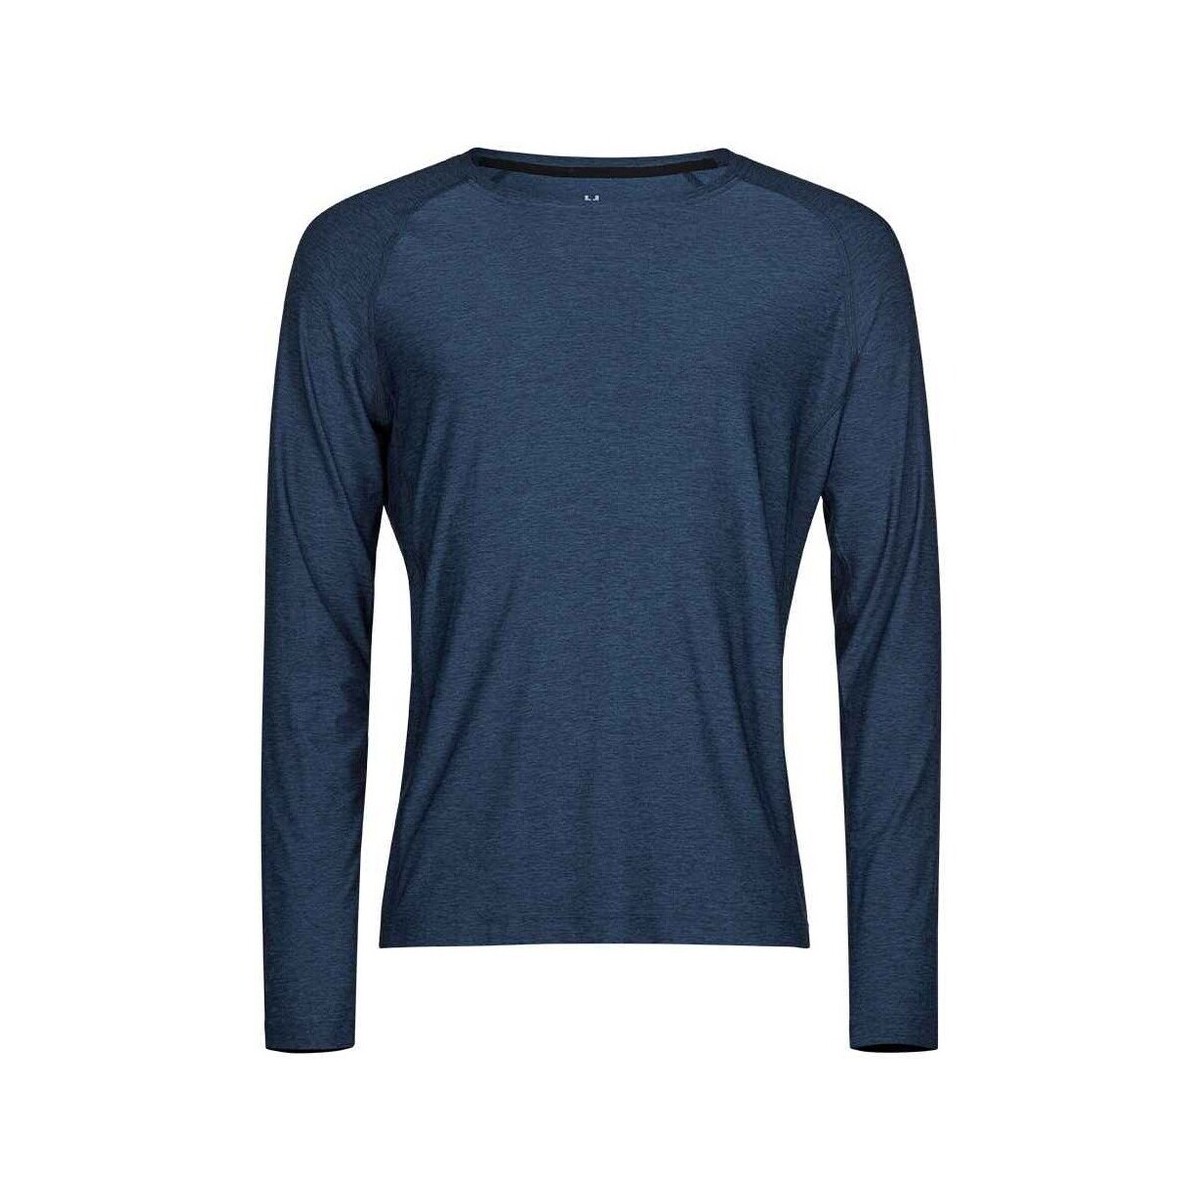 Vêtements Homme T-shirts manches longues Tee Jays T7022 Bleu